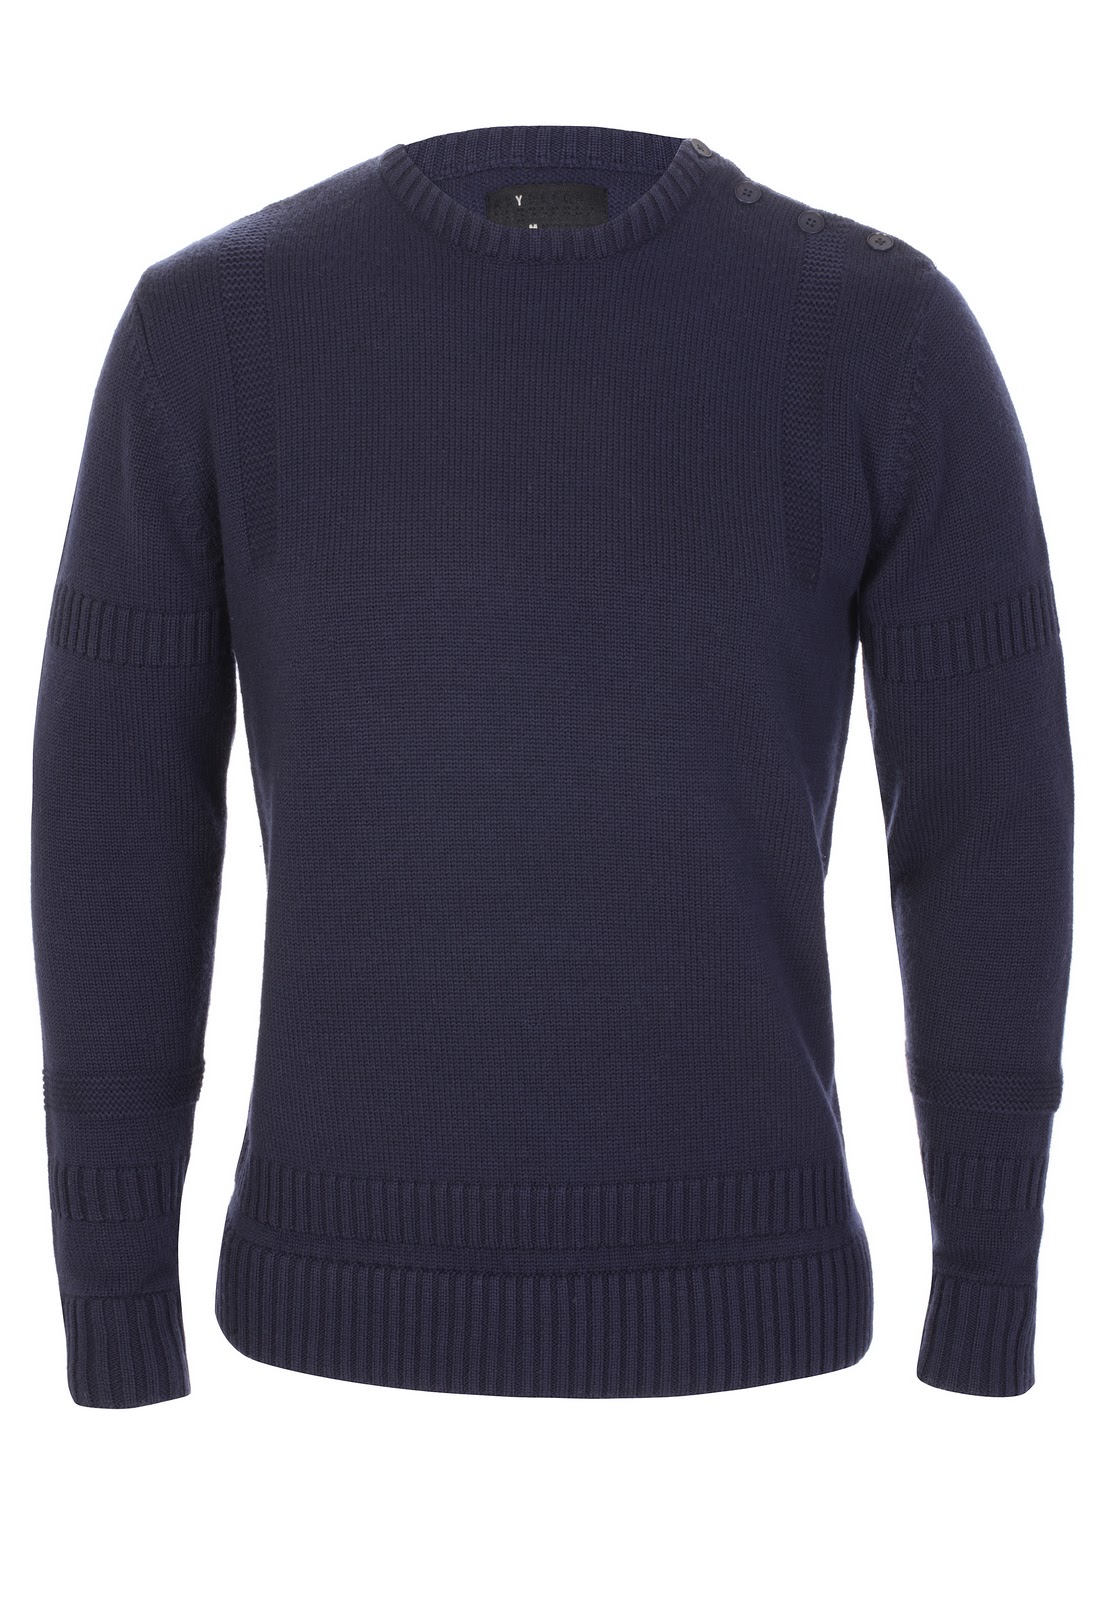 men's styling: Nautical knitwear - the original Guernsey sweater